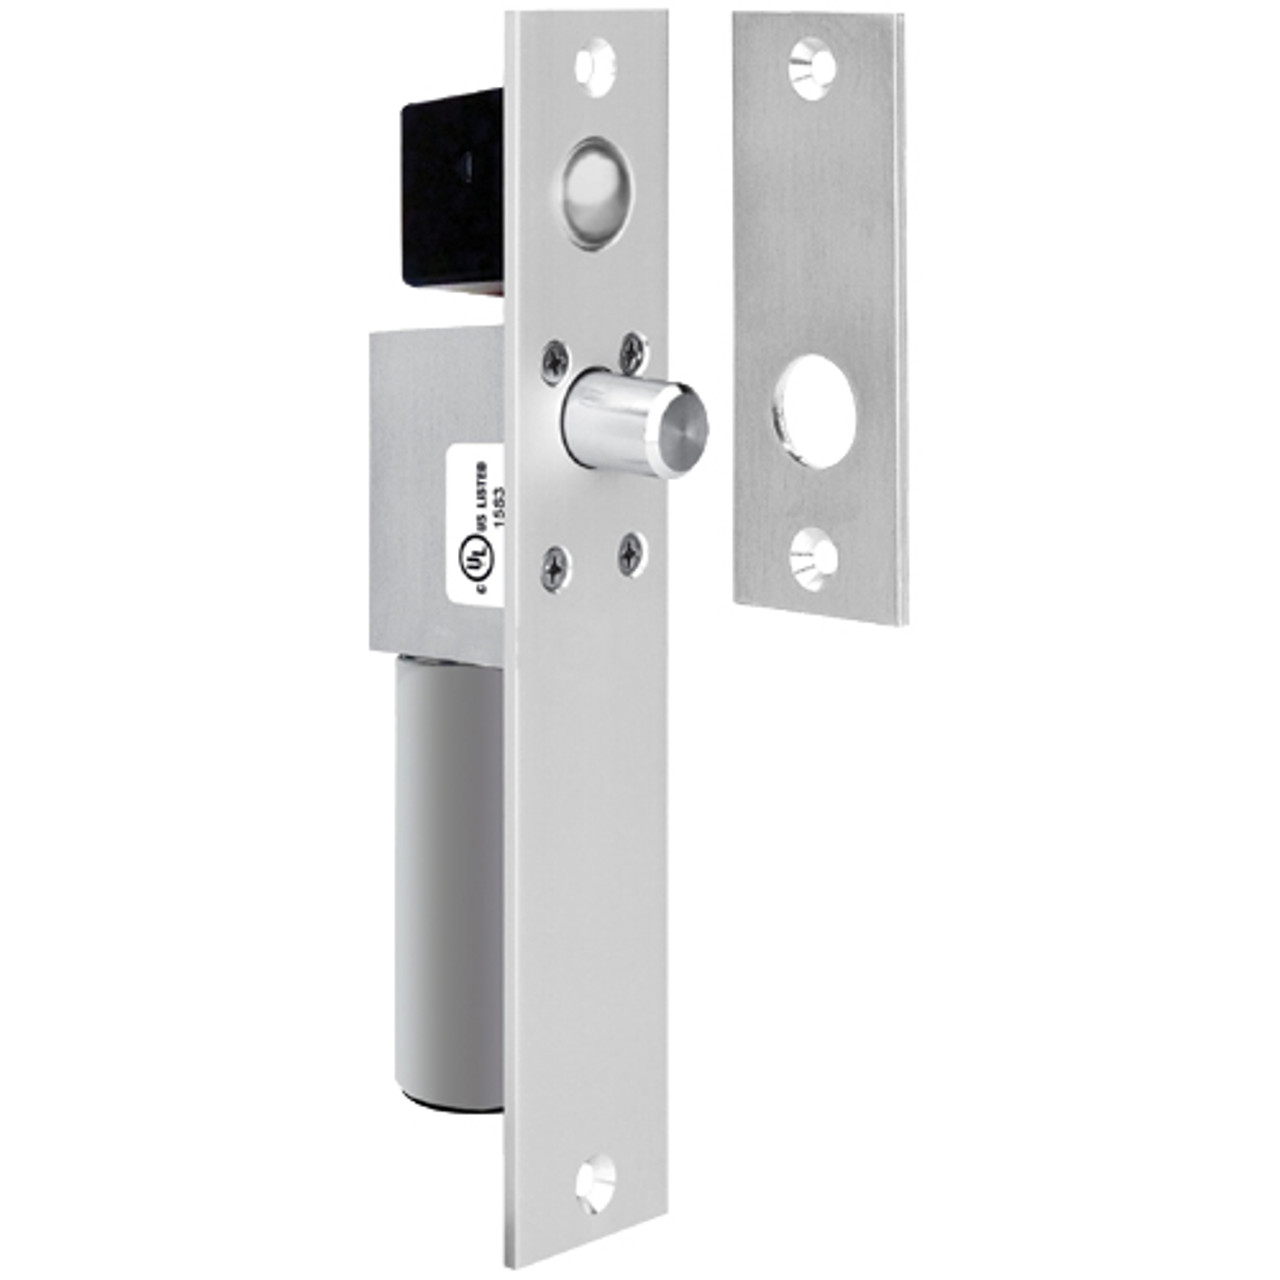 1291AHVD SDC Failsecure Spacesaver Mortise Bolt Lock with Door Position Sensor in Aluminum